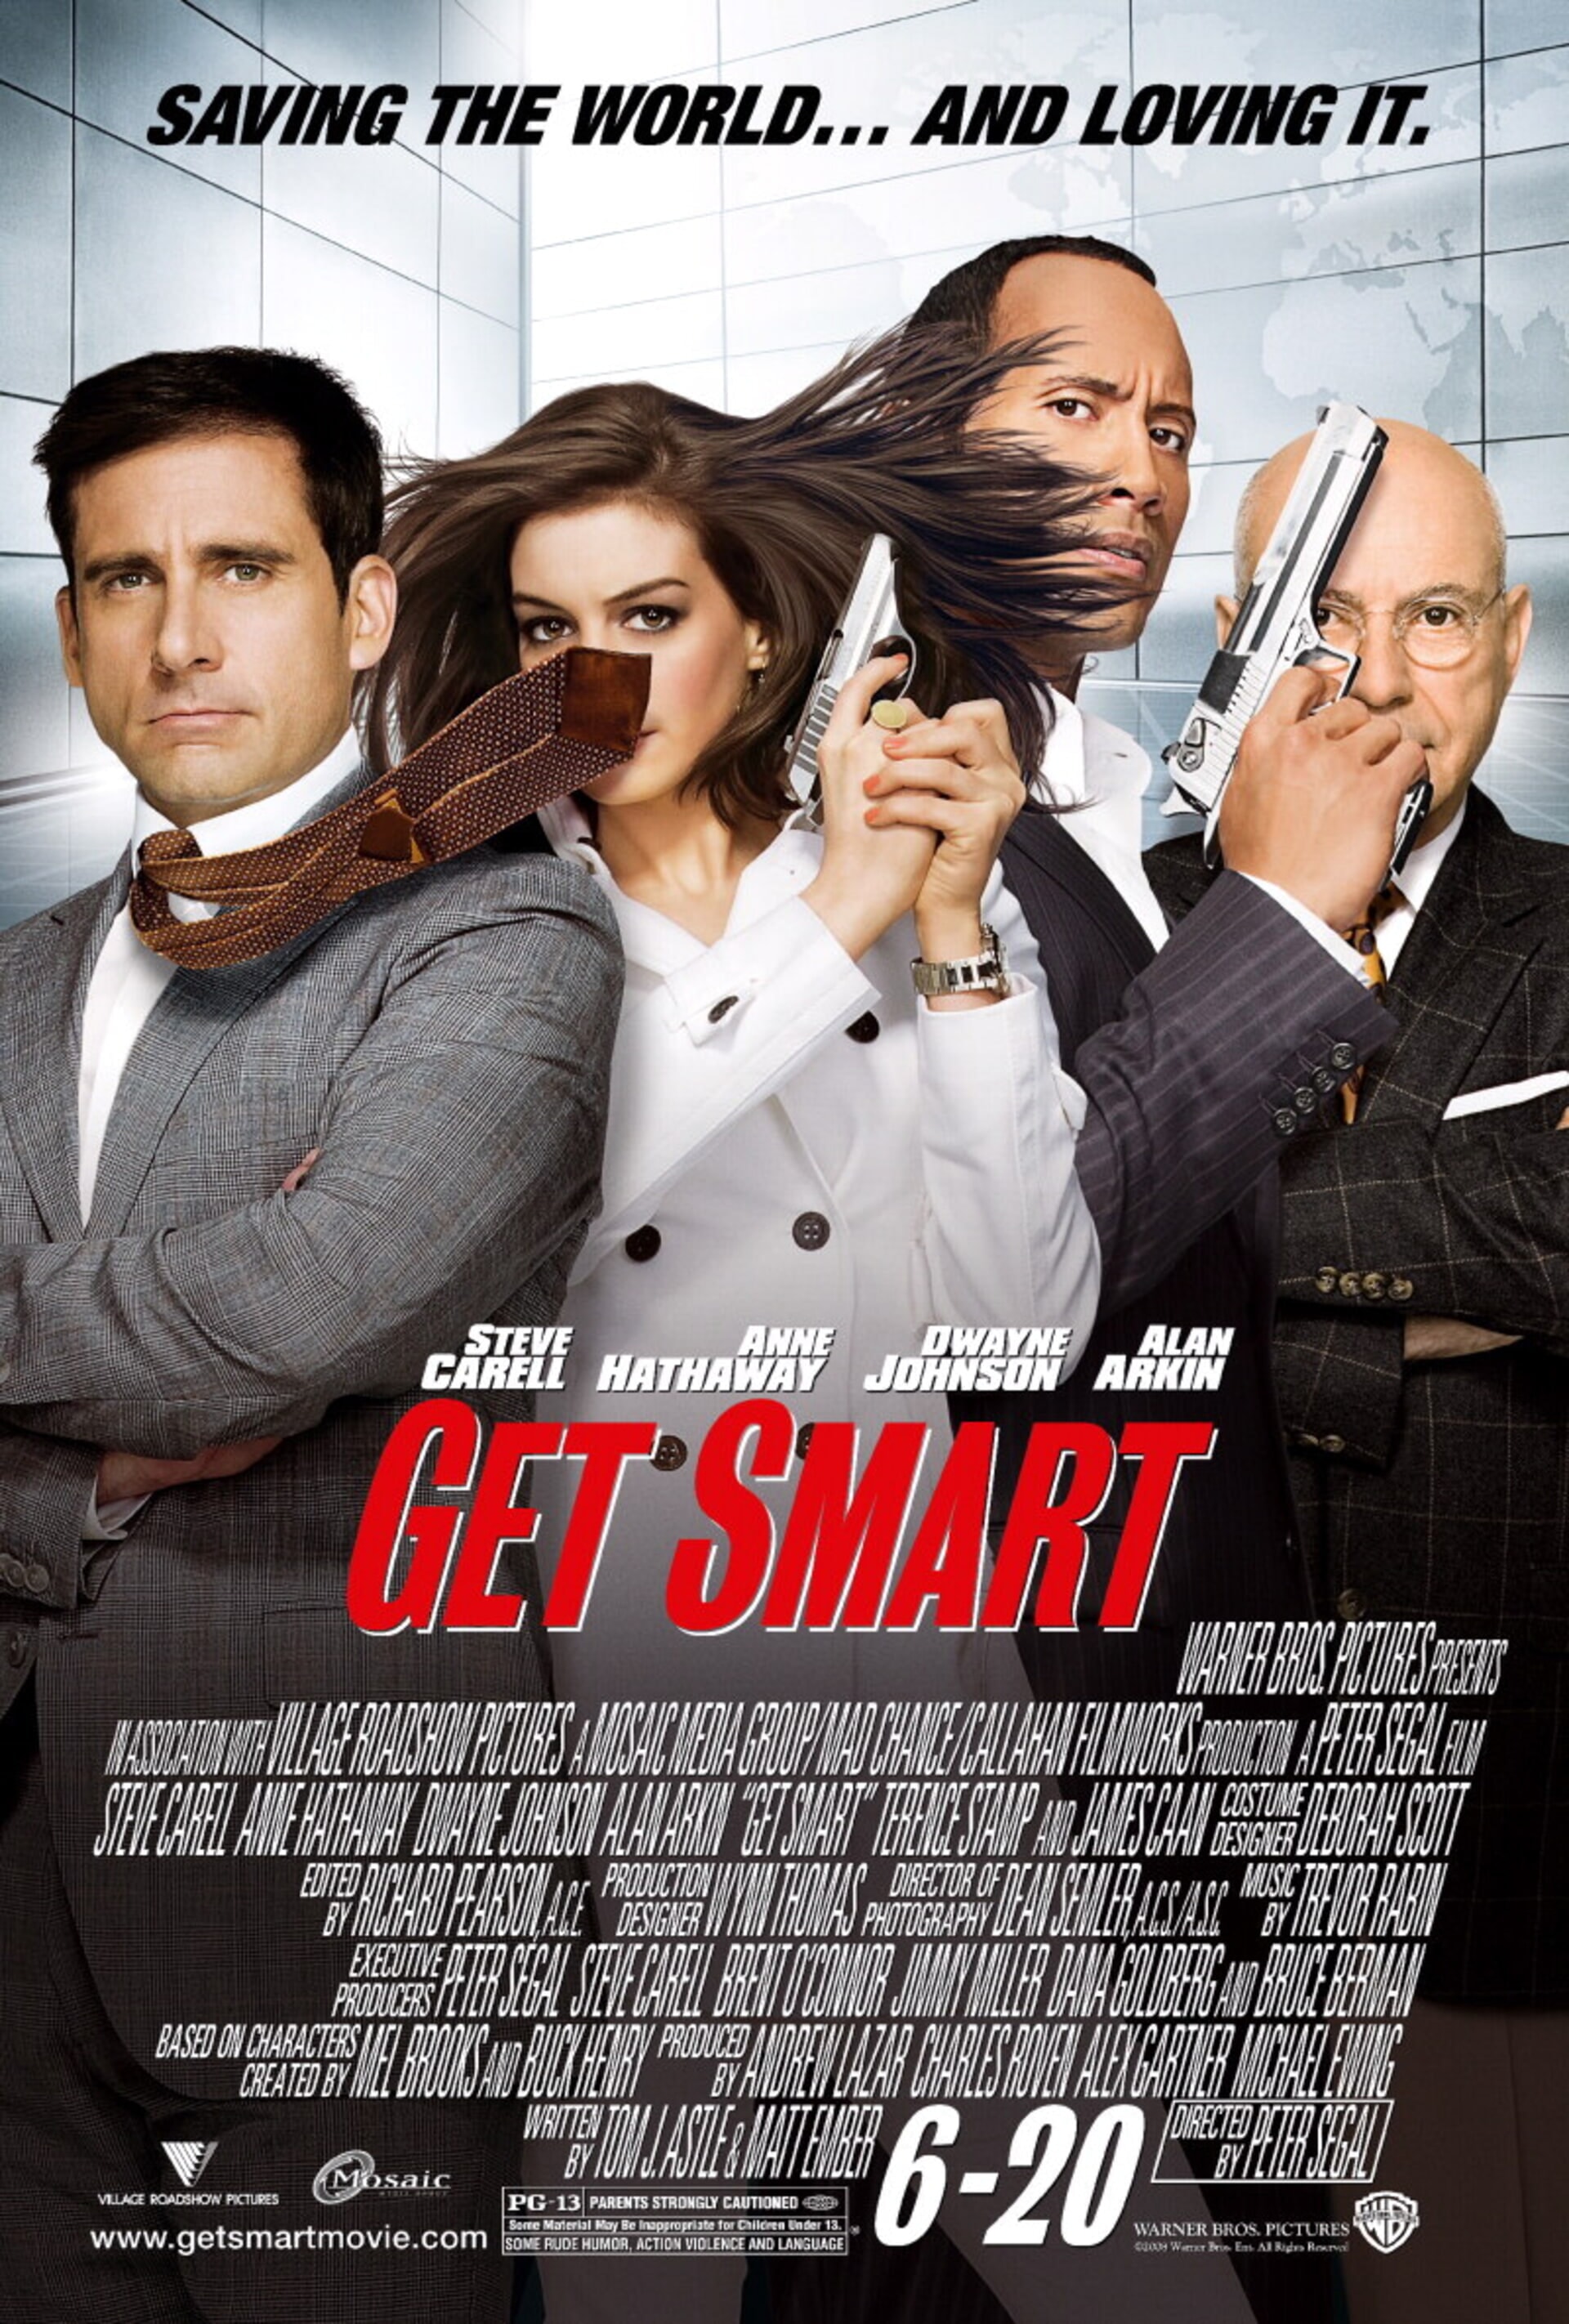 get smart christian movie review